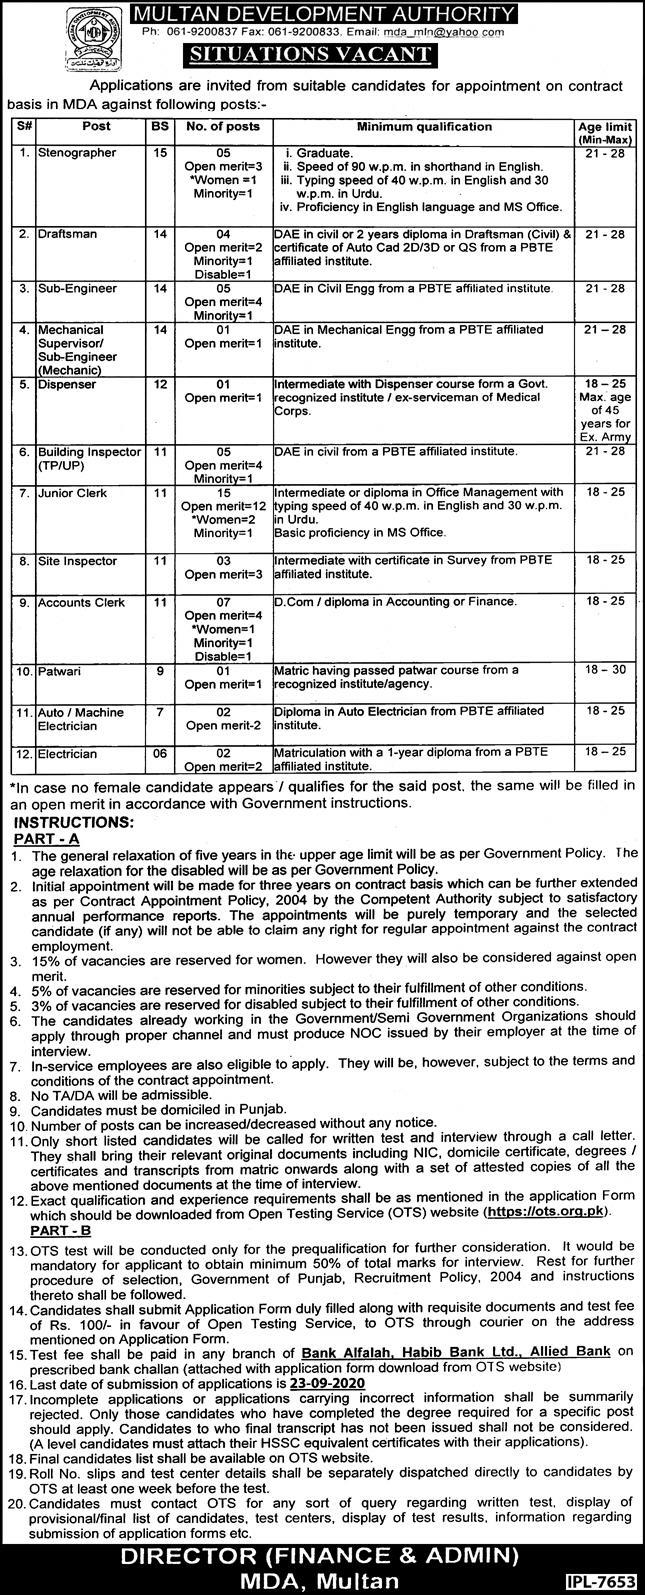 Latest Jobs in Multan Development Authority Jobs 2020